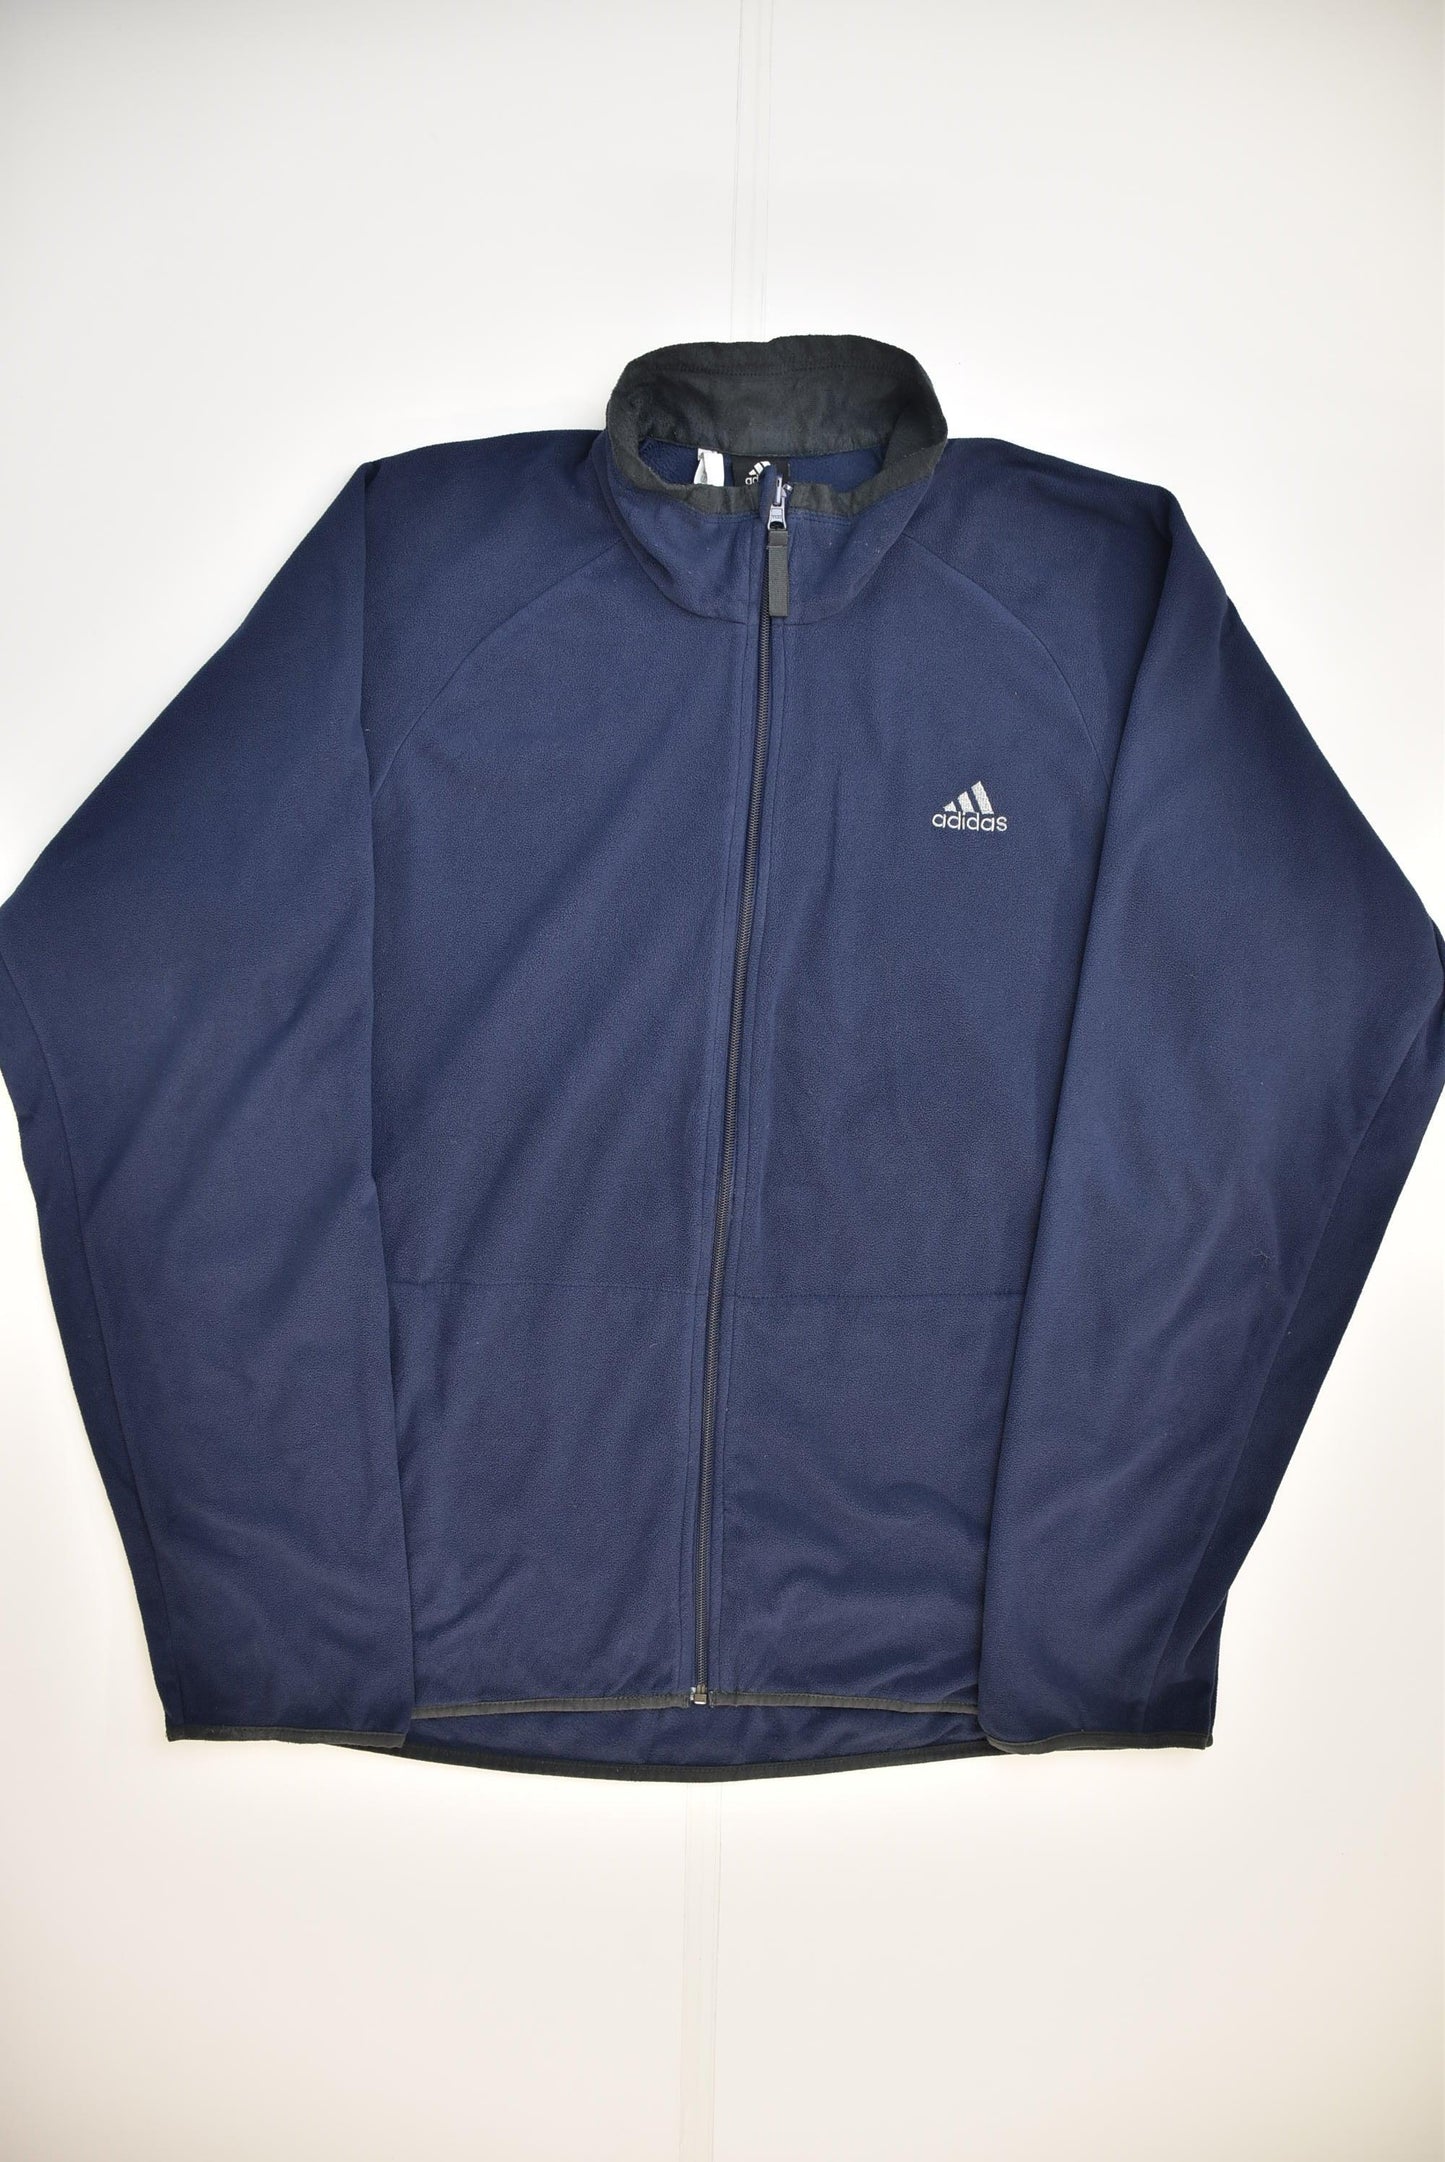 Adidas Zip-Up Fleece (XL)